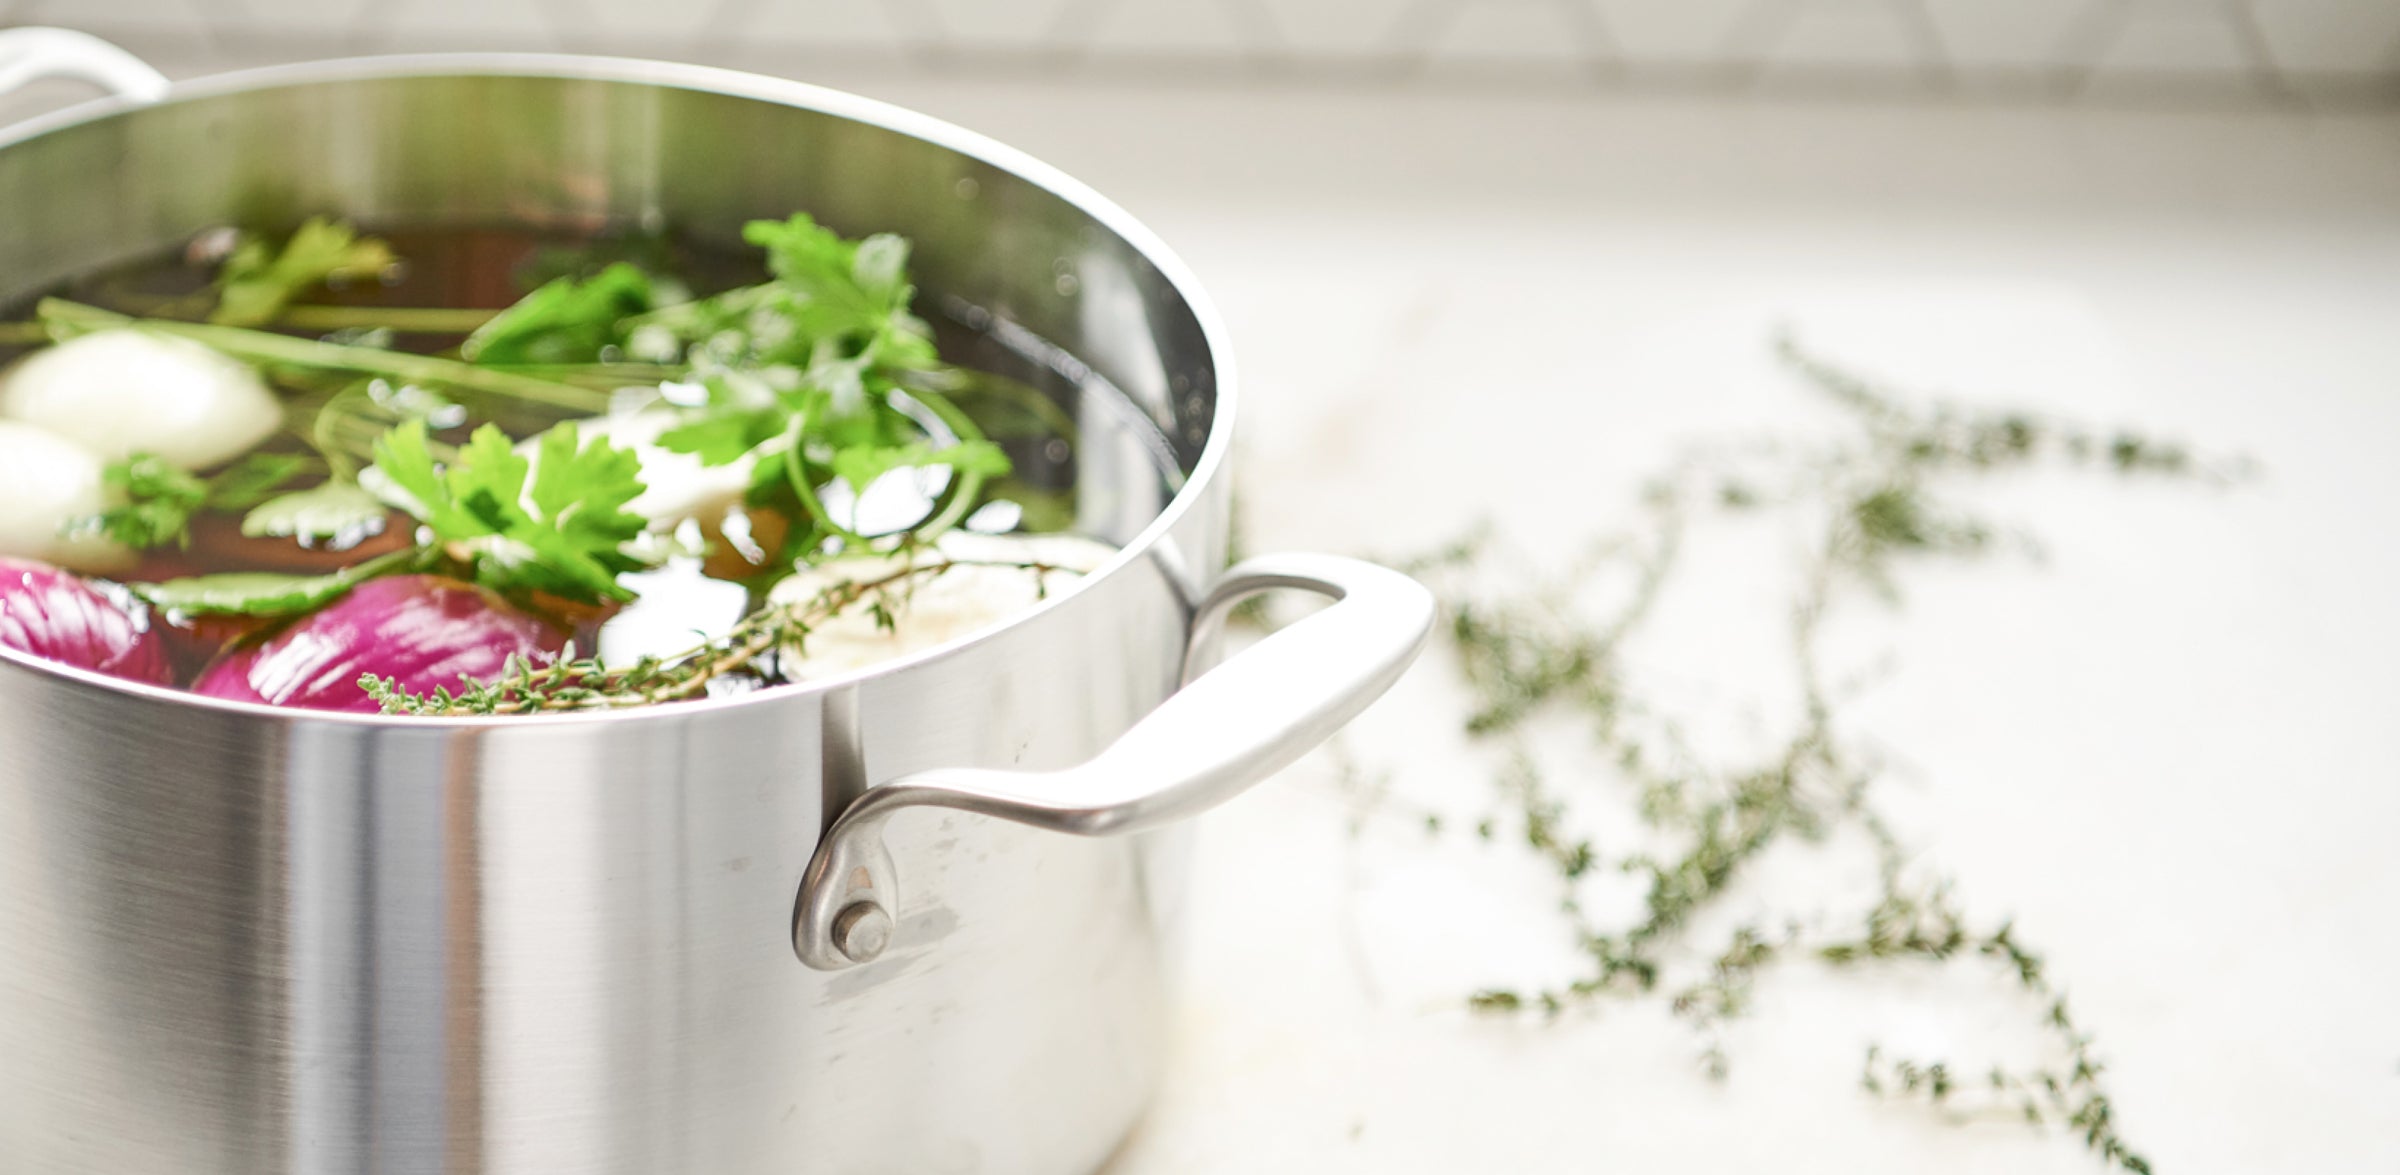 Exquisite Non-stick Pot Stew Pot Metal Pot Soup Stew Pot Home Kitchen Cook  Ware